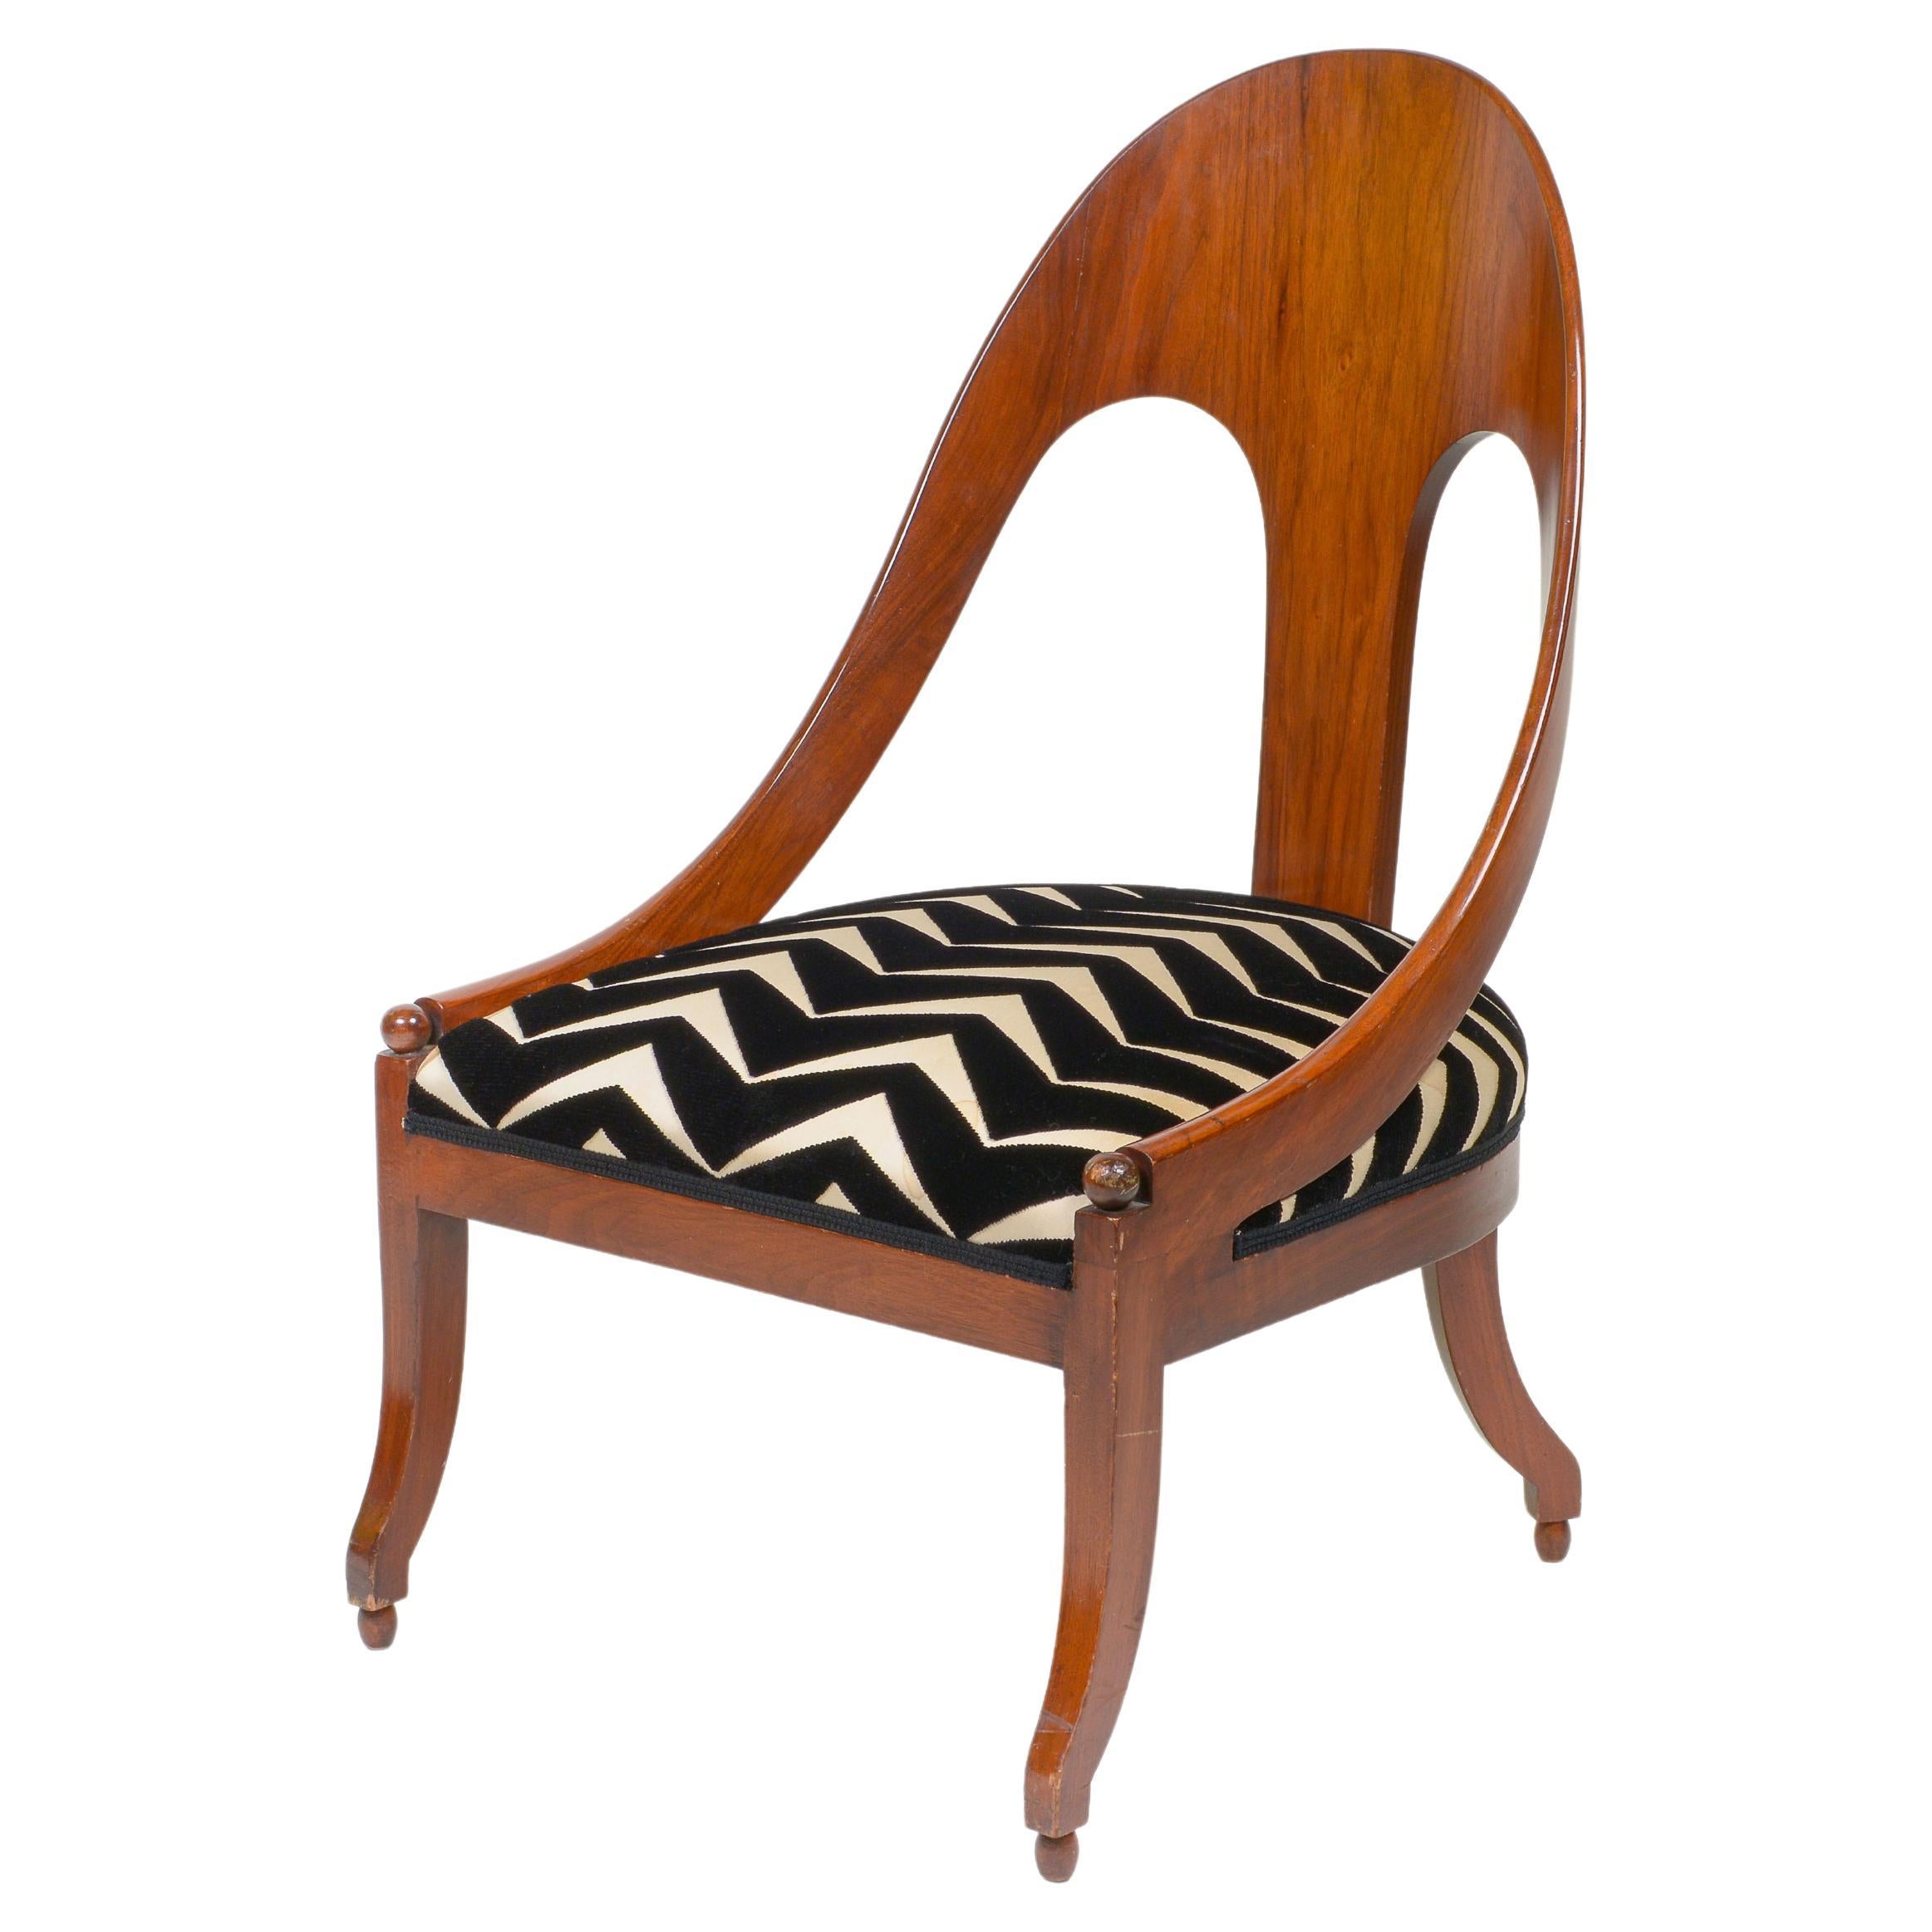 A Michael Taylor for Baker Mahogany Spoonback Slipper Chair